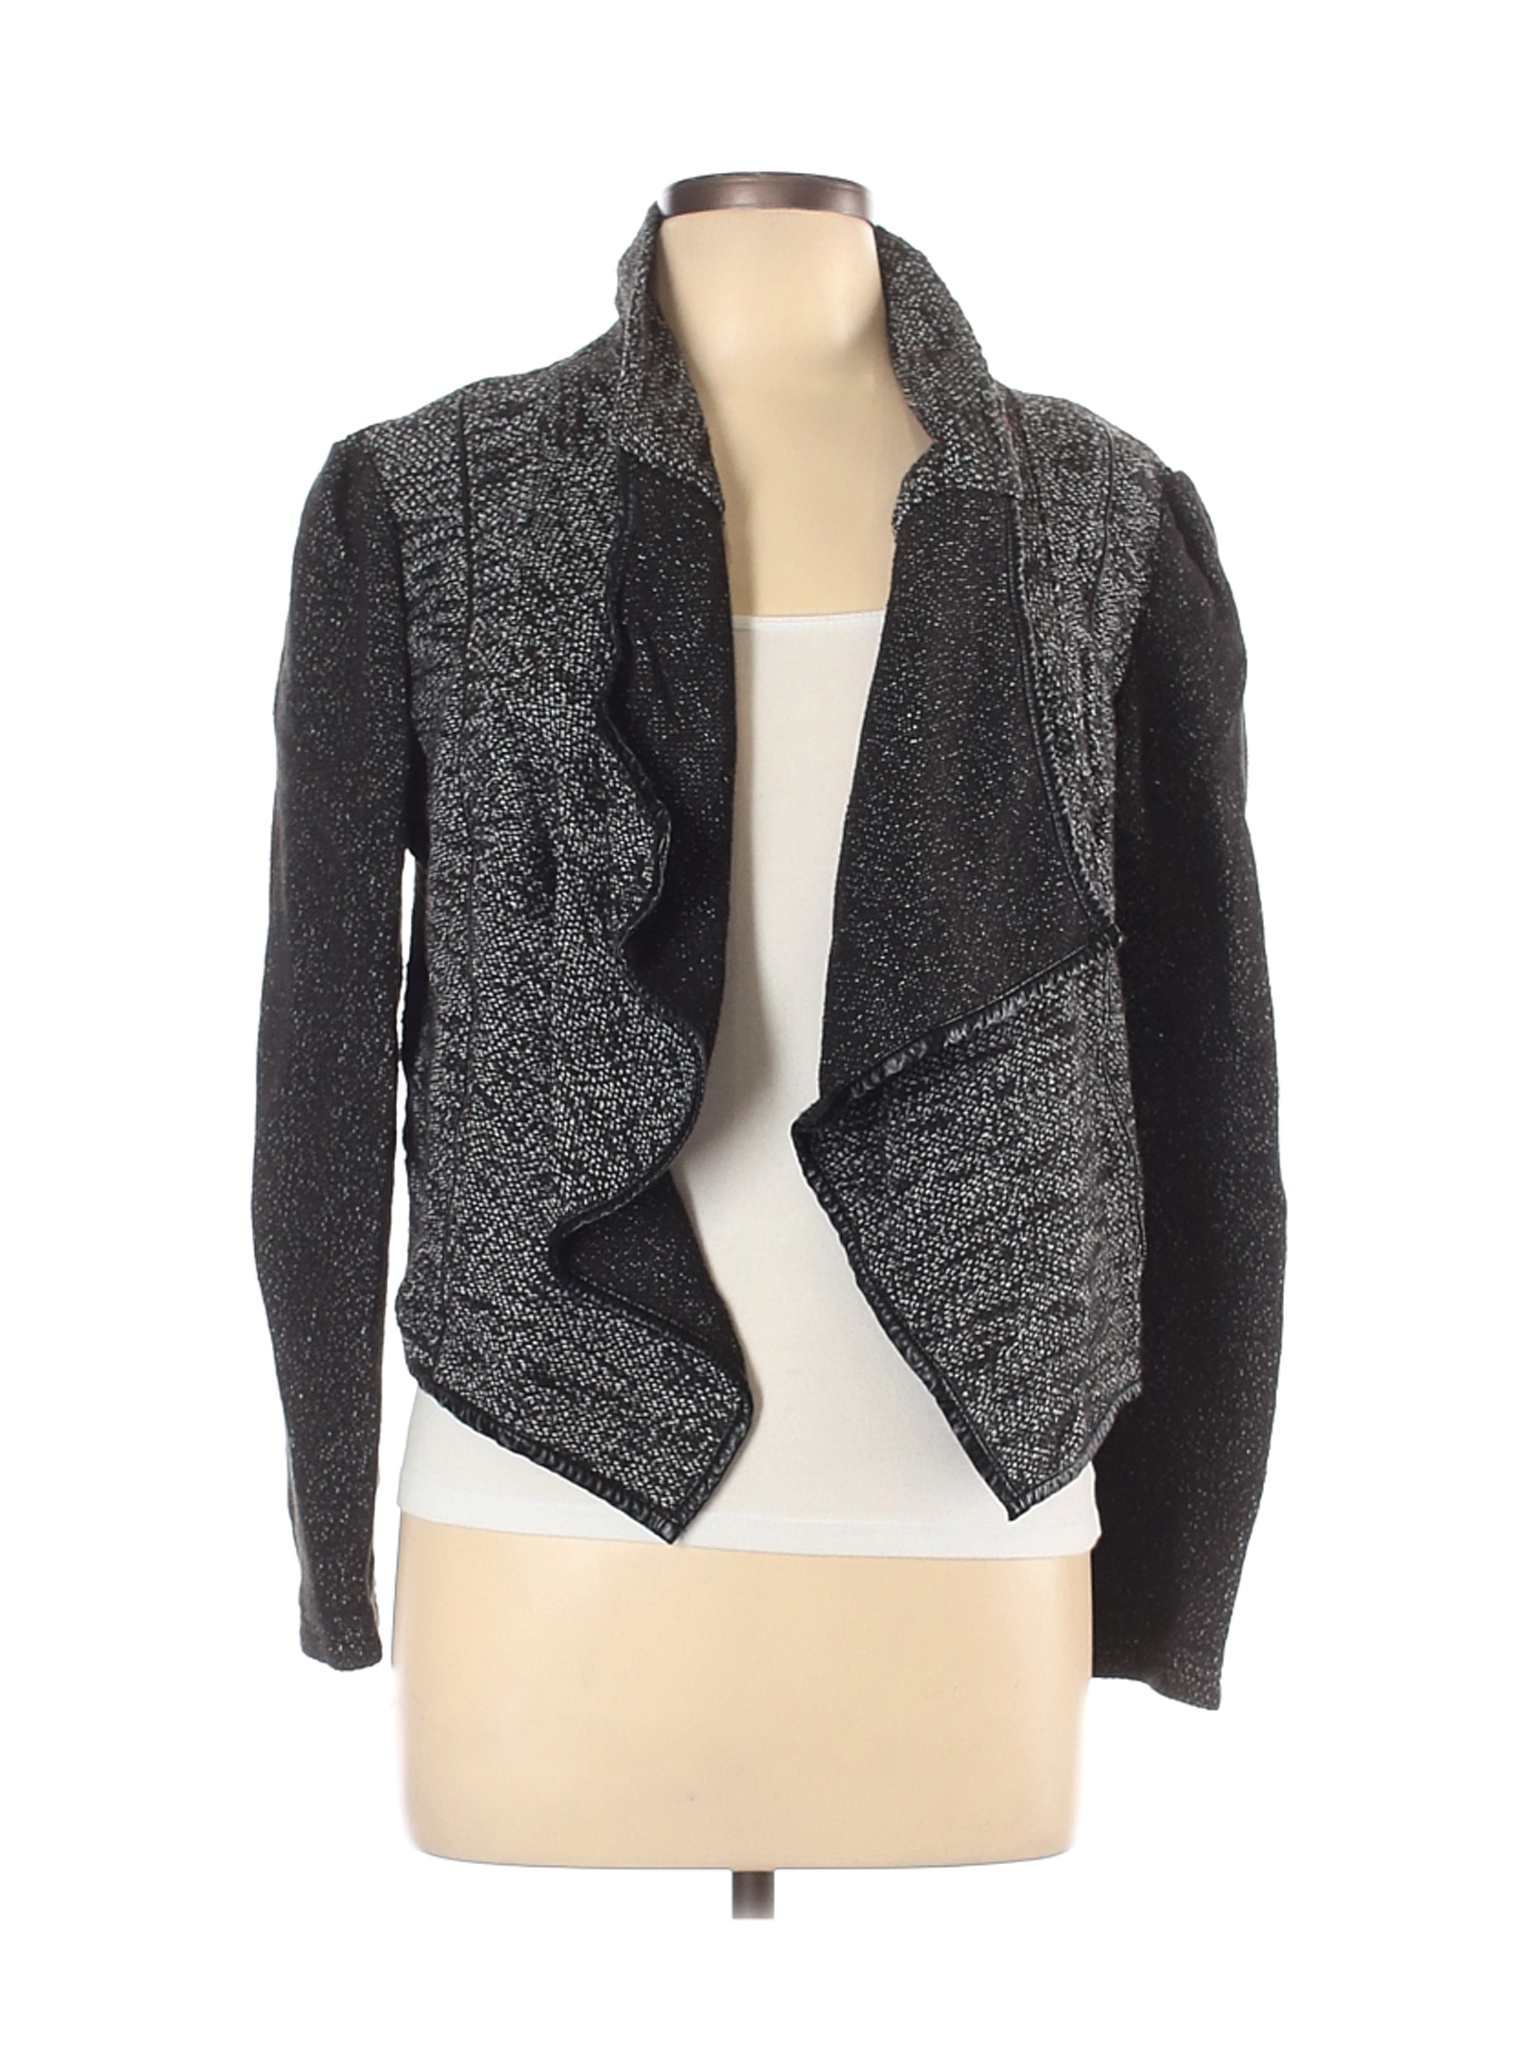 Express Women Gray Jacket L | eBay